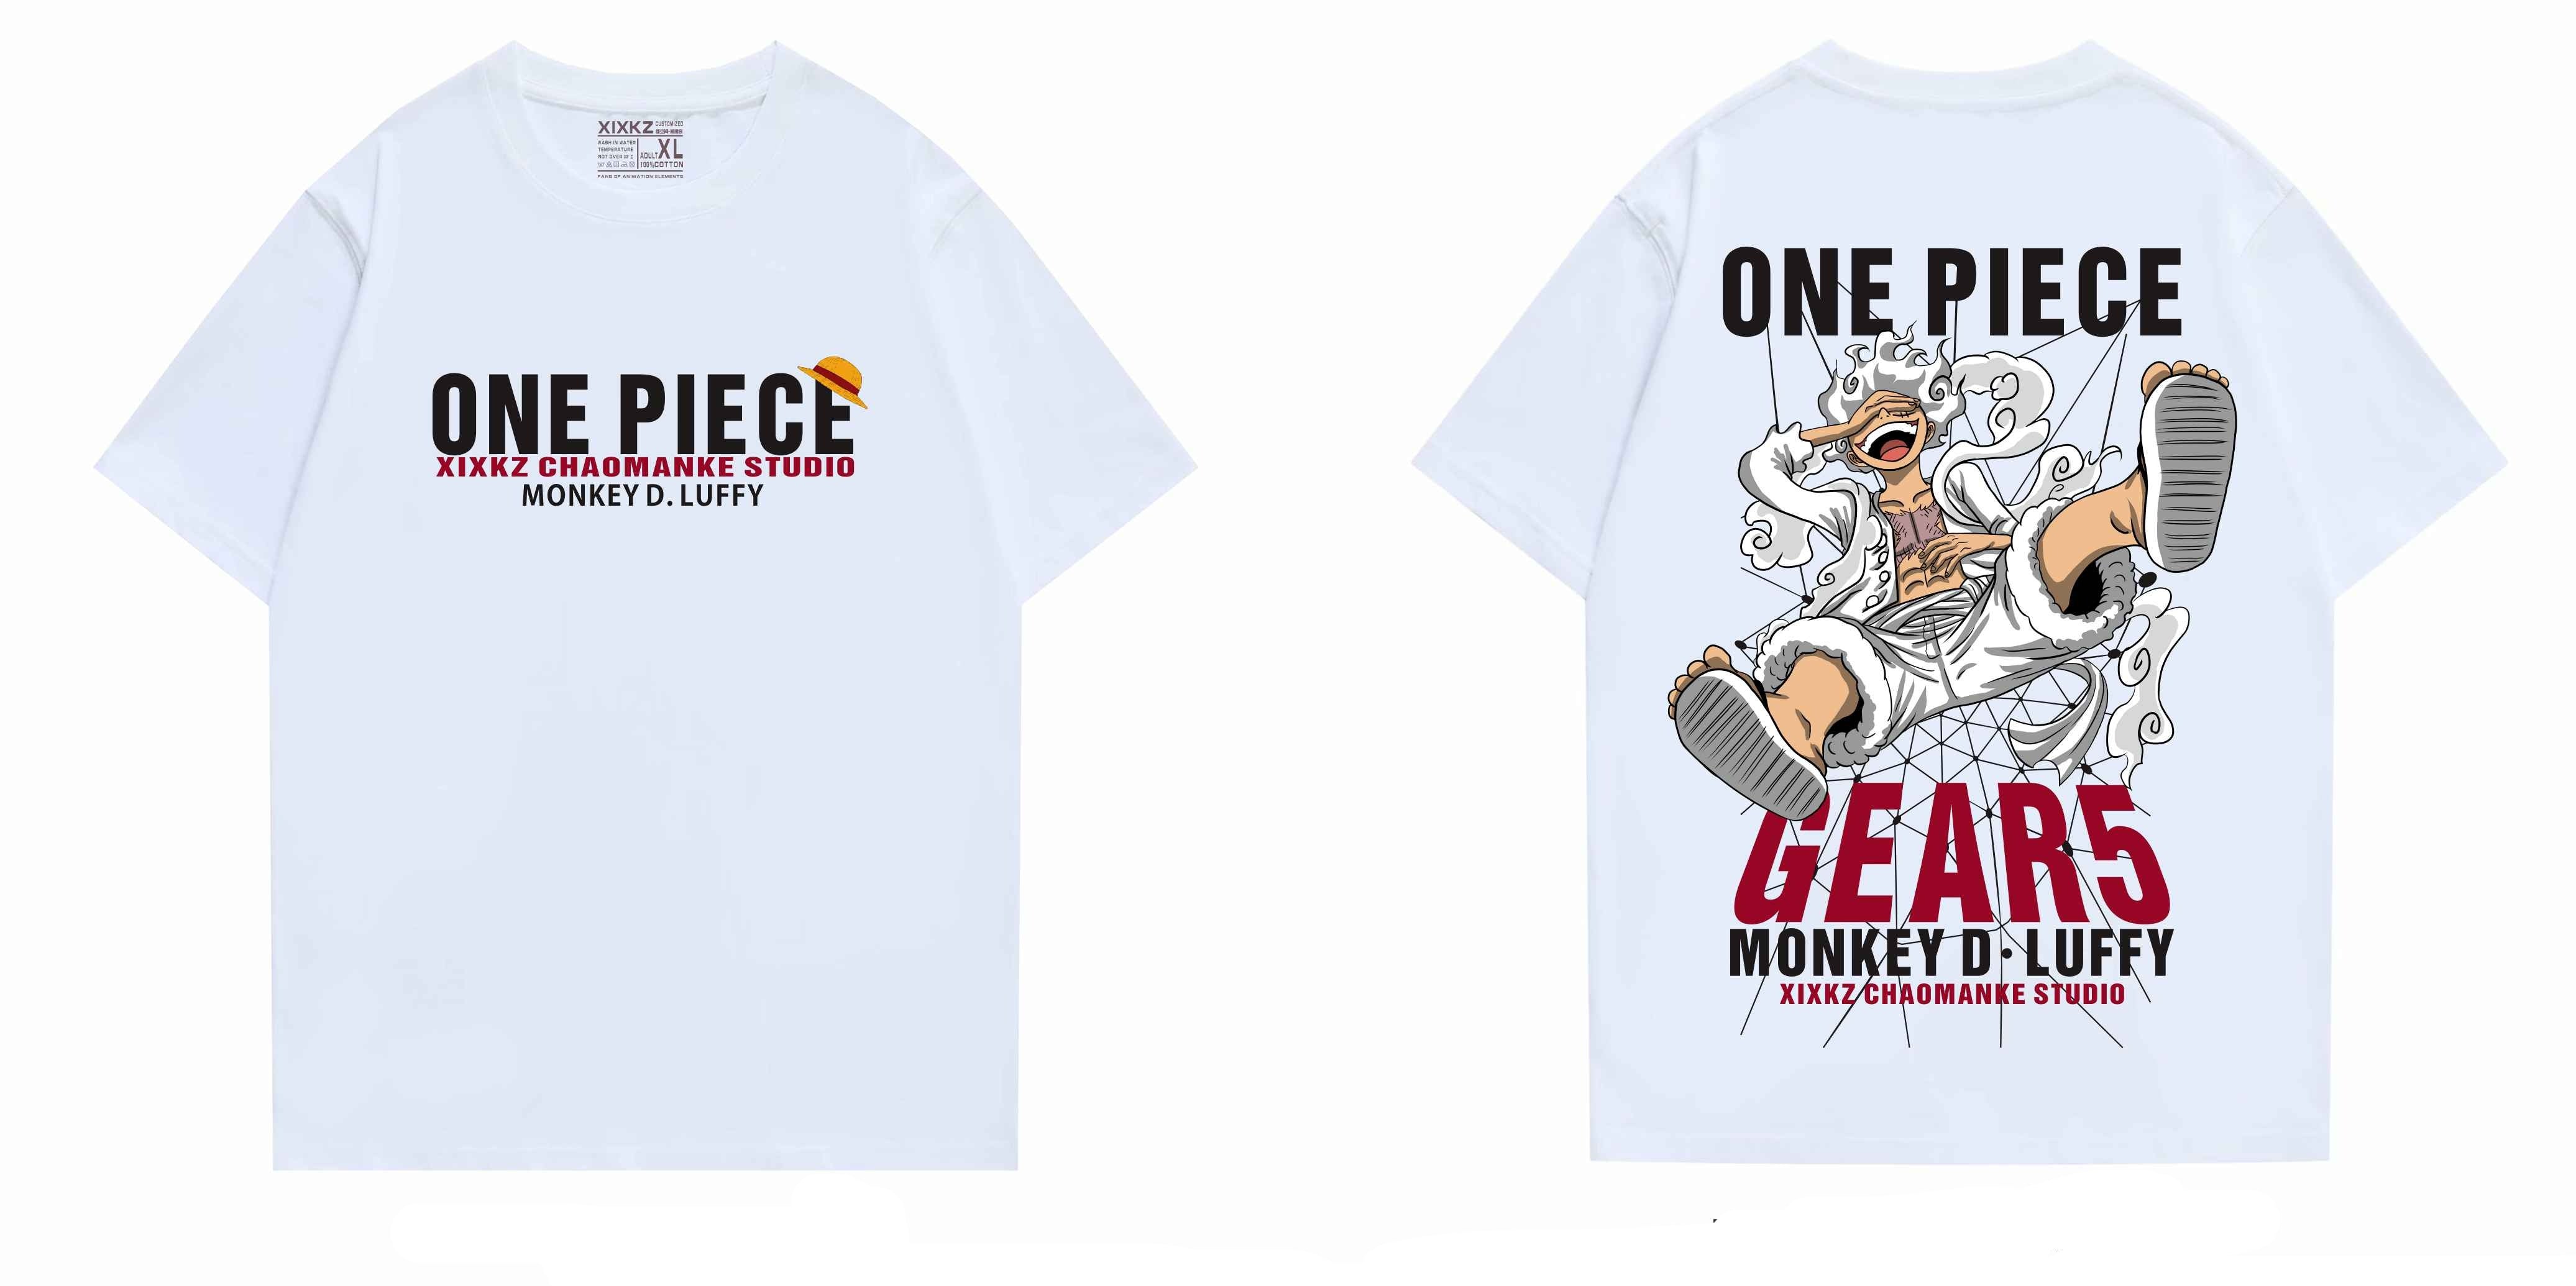 One Piece Luffy Gear 4 Anime Jacket, Hoodie, Sweater, T-shirt